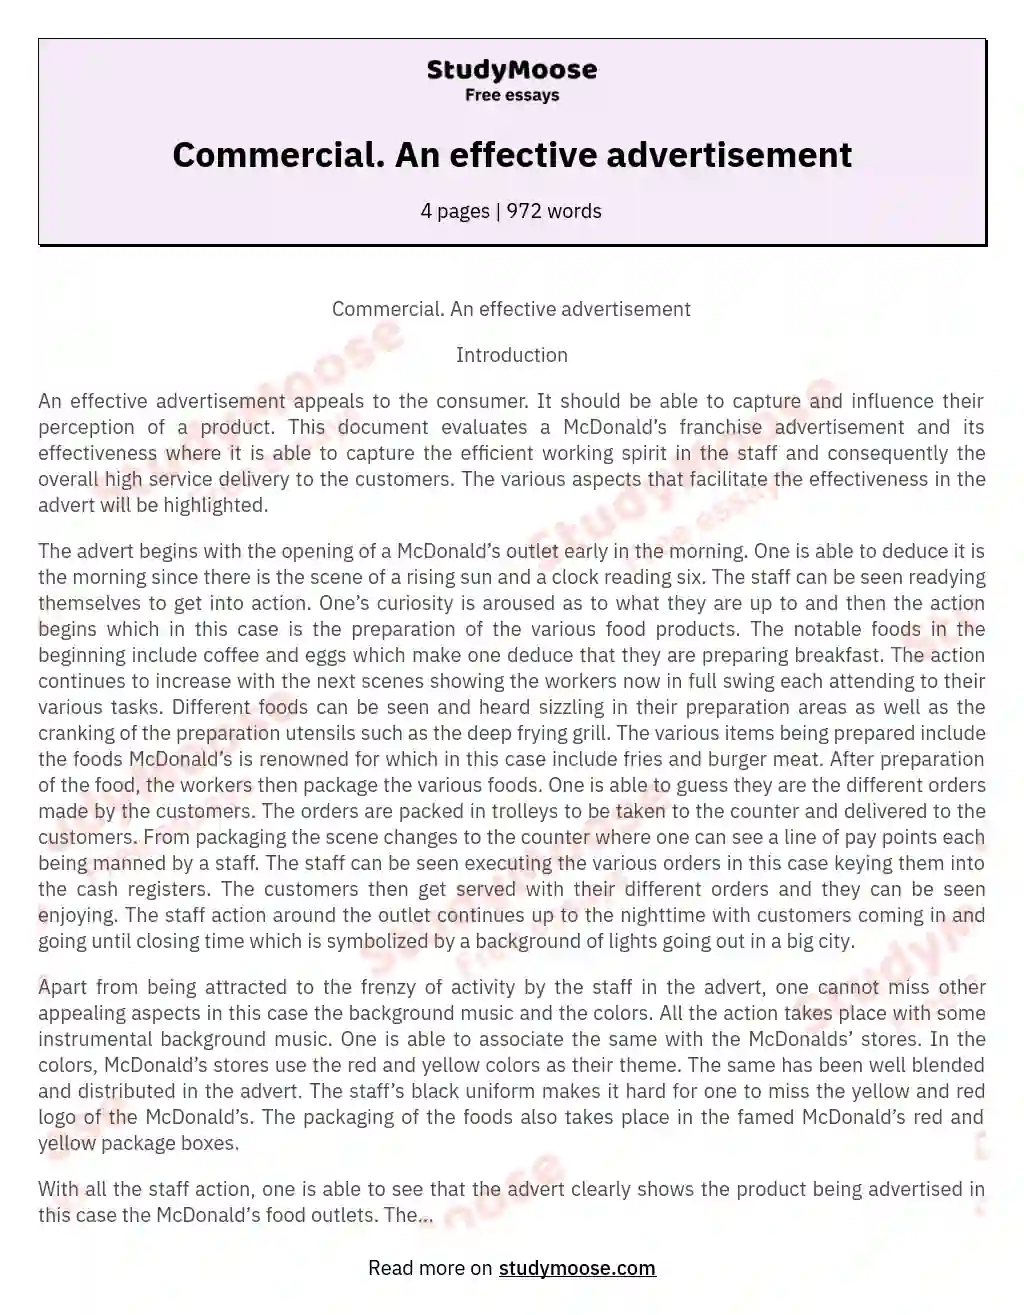 Commercial. An effective advertisement essay